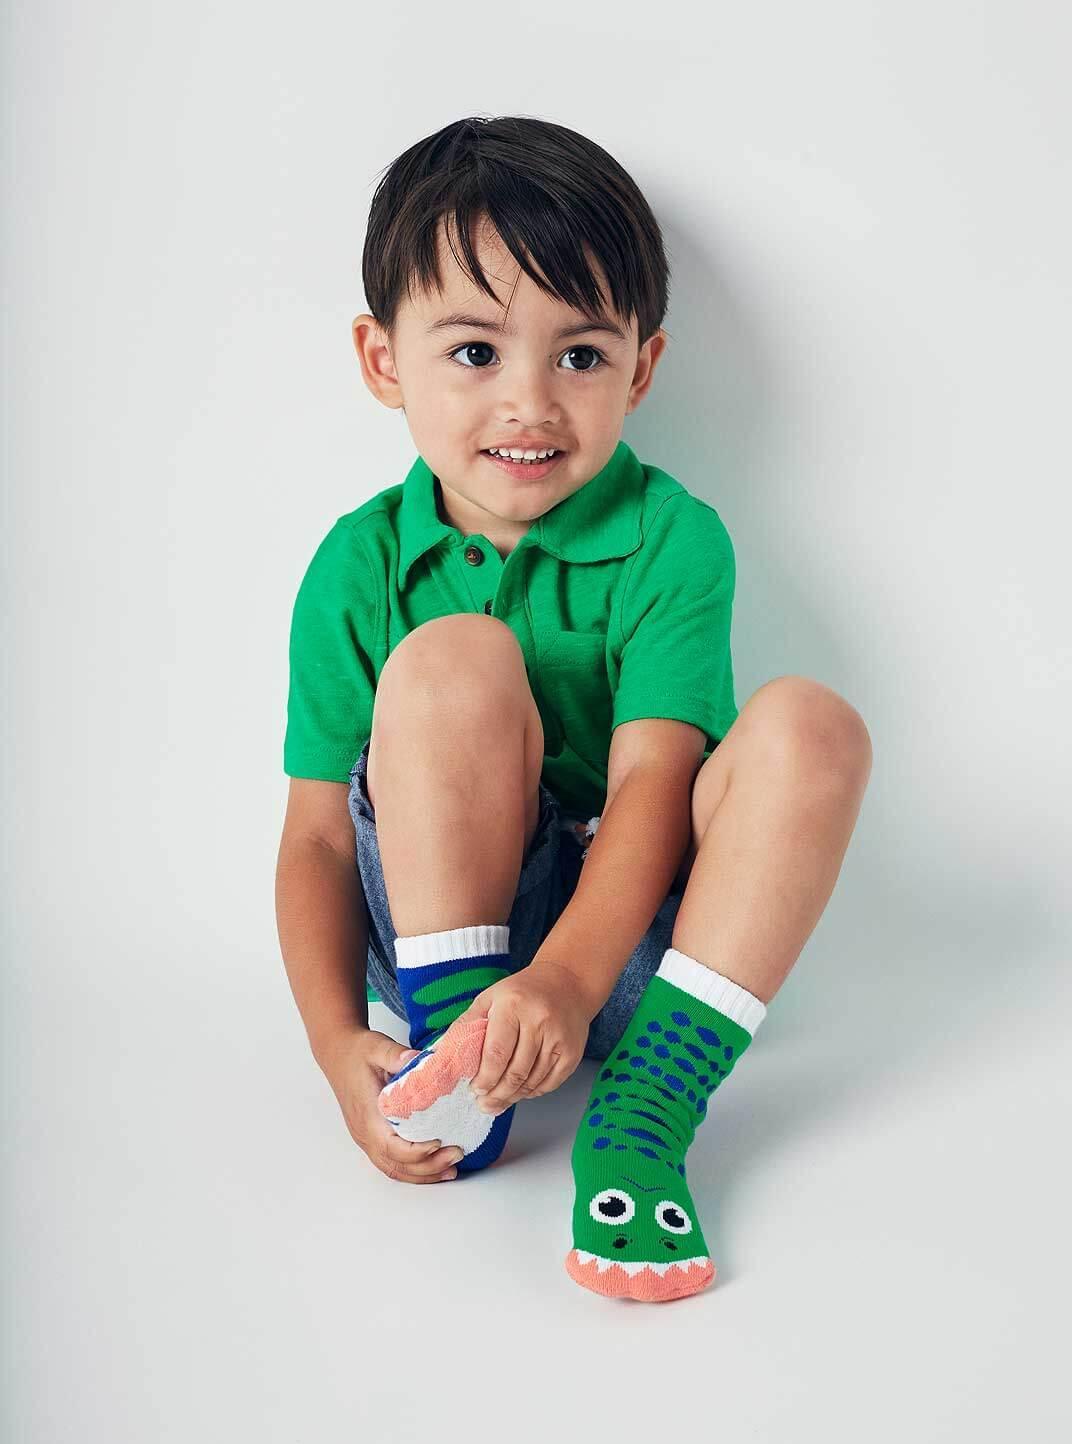 T-Rex & Triceratops | Kids Socks | Mismatched Cute Crazy Fun Socks - Pals Socks - The Sock Monster